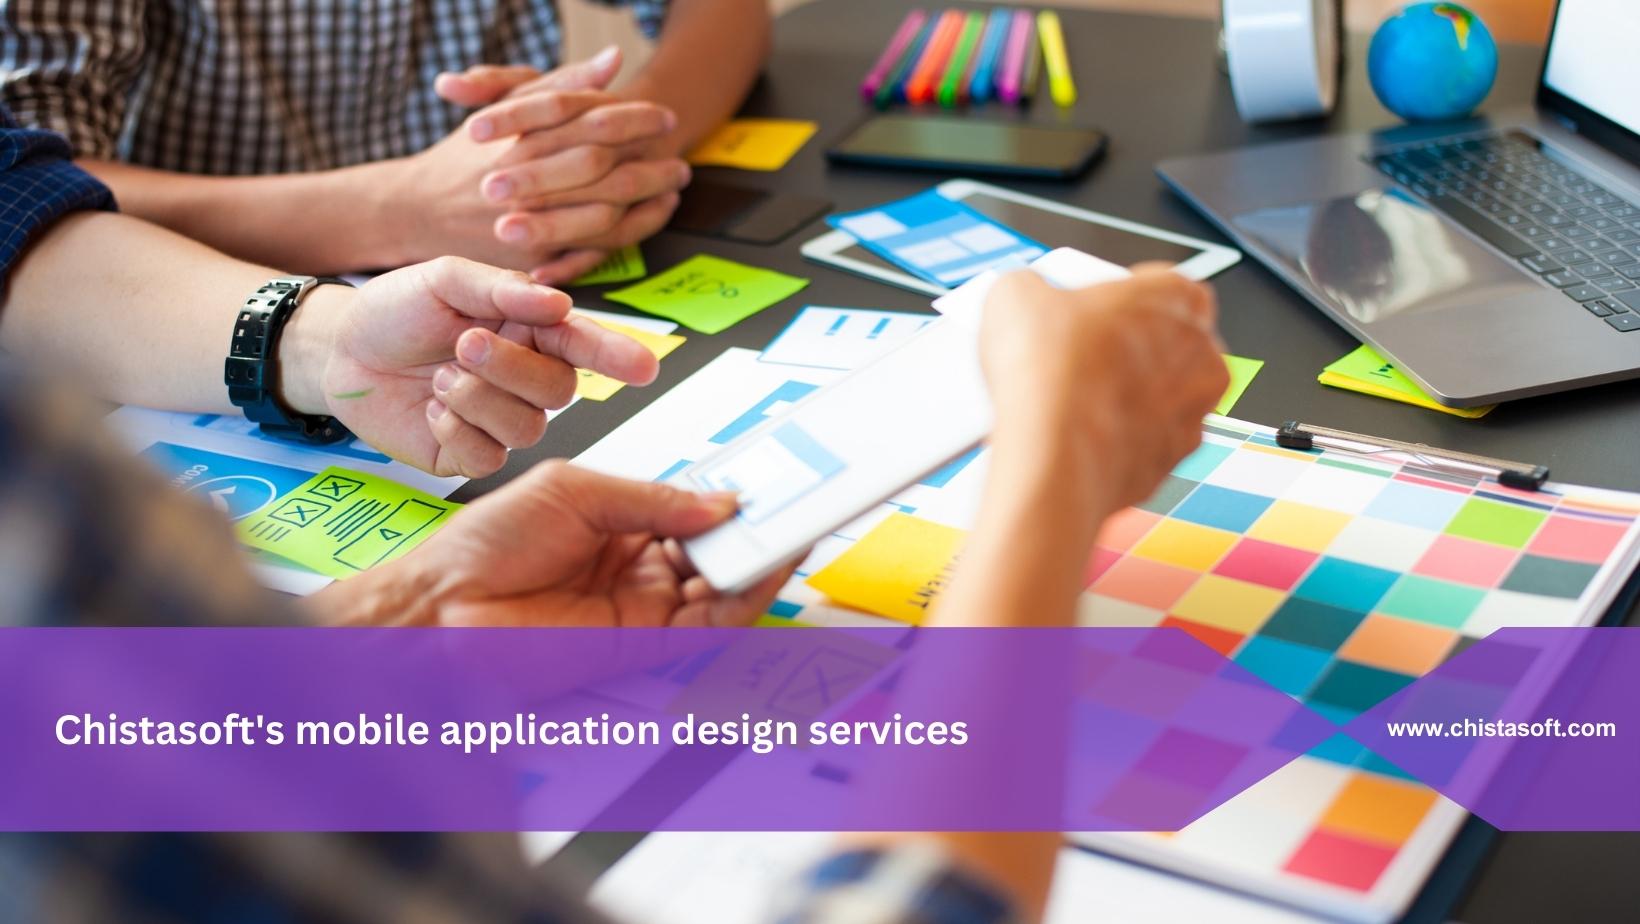 Chistasoft's mobile application design services